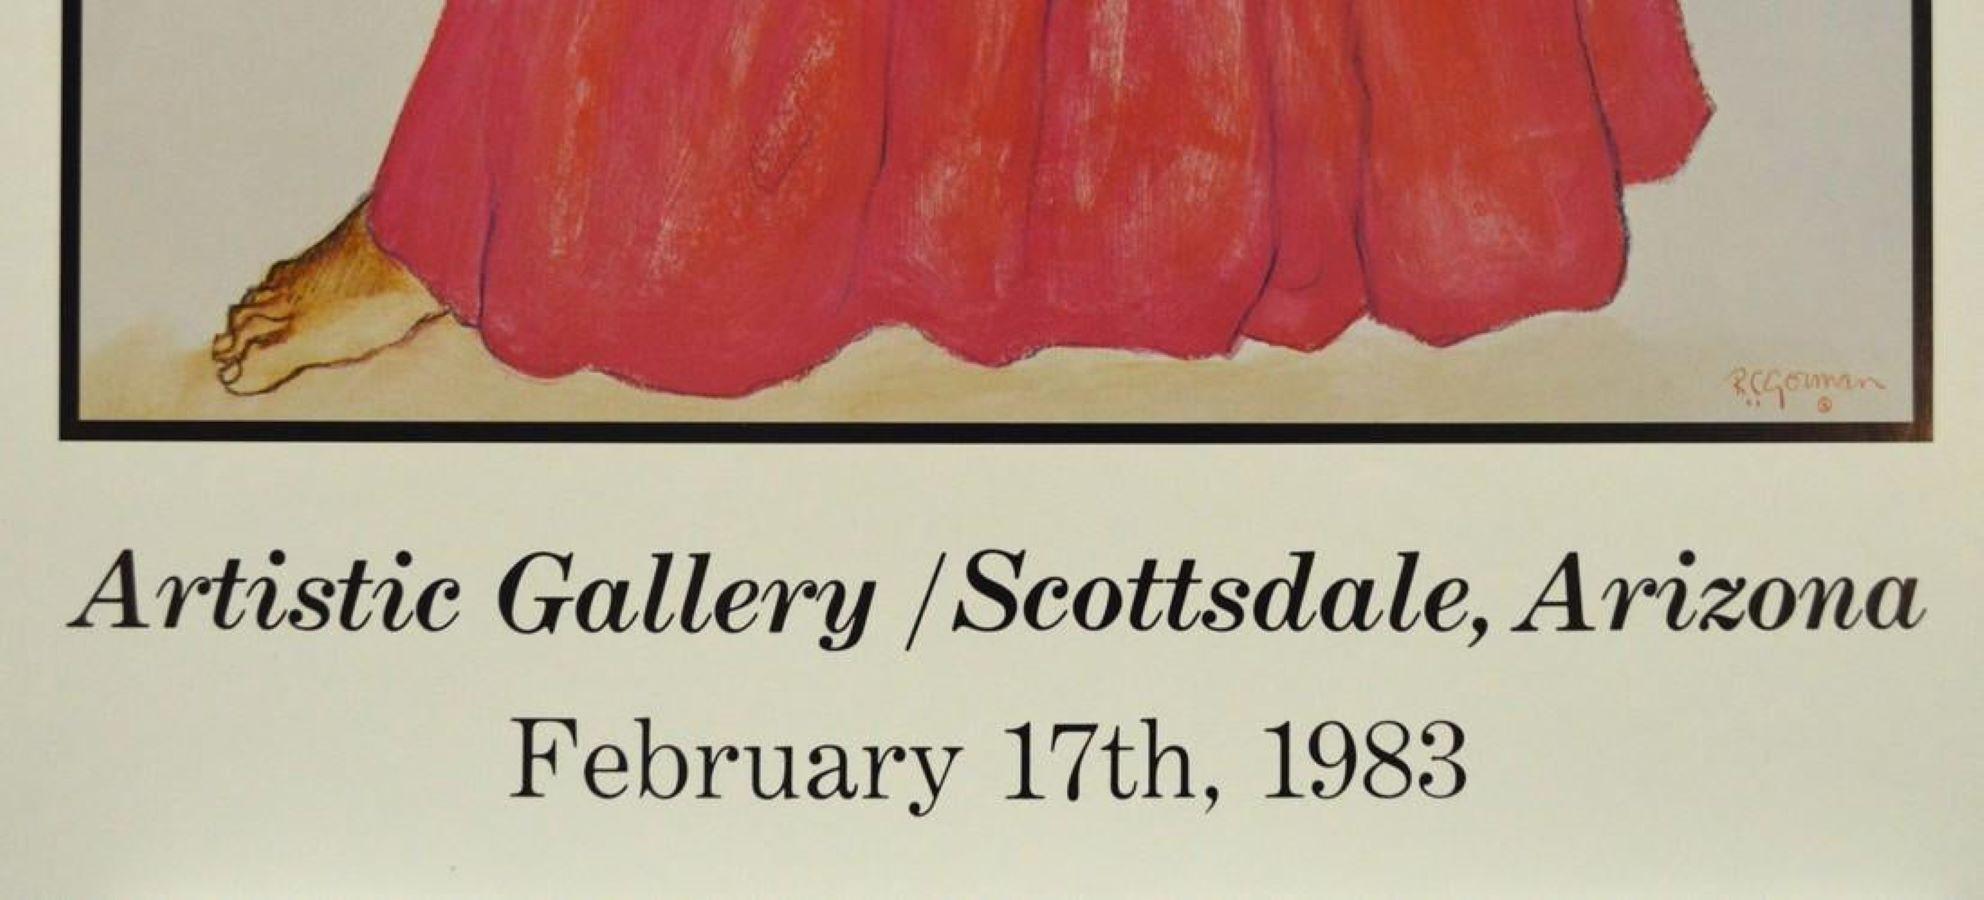 Artistic Gallery/Scottsdale, Arizona-February 17th, 1983 - Print by R.C. Gorman